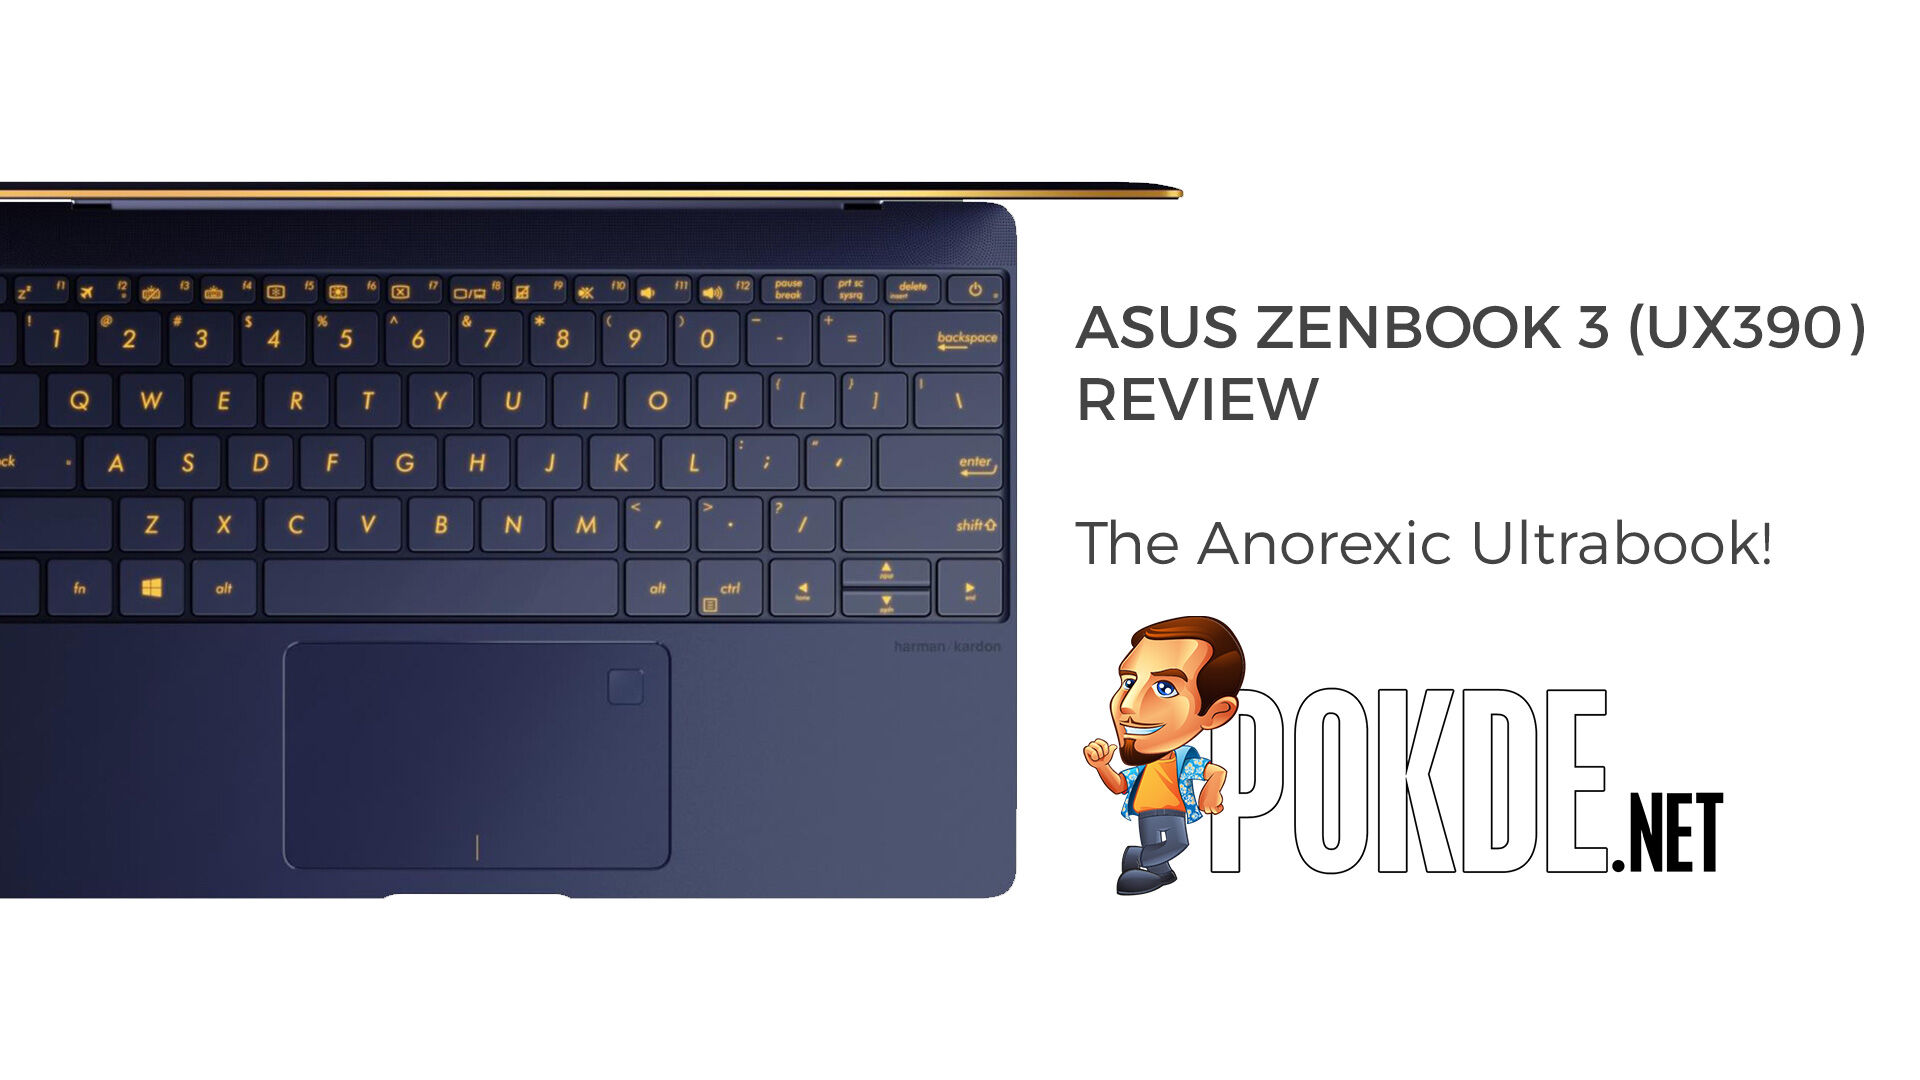 Asus ZenBook 3 (UX390) Review - The Anorexic Ultrabook – Pokde.Net